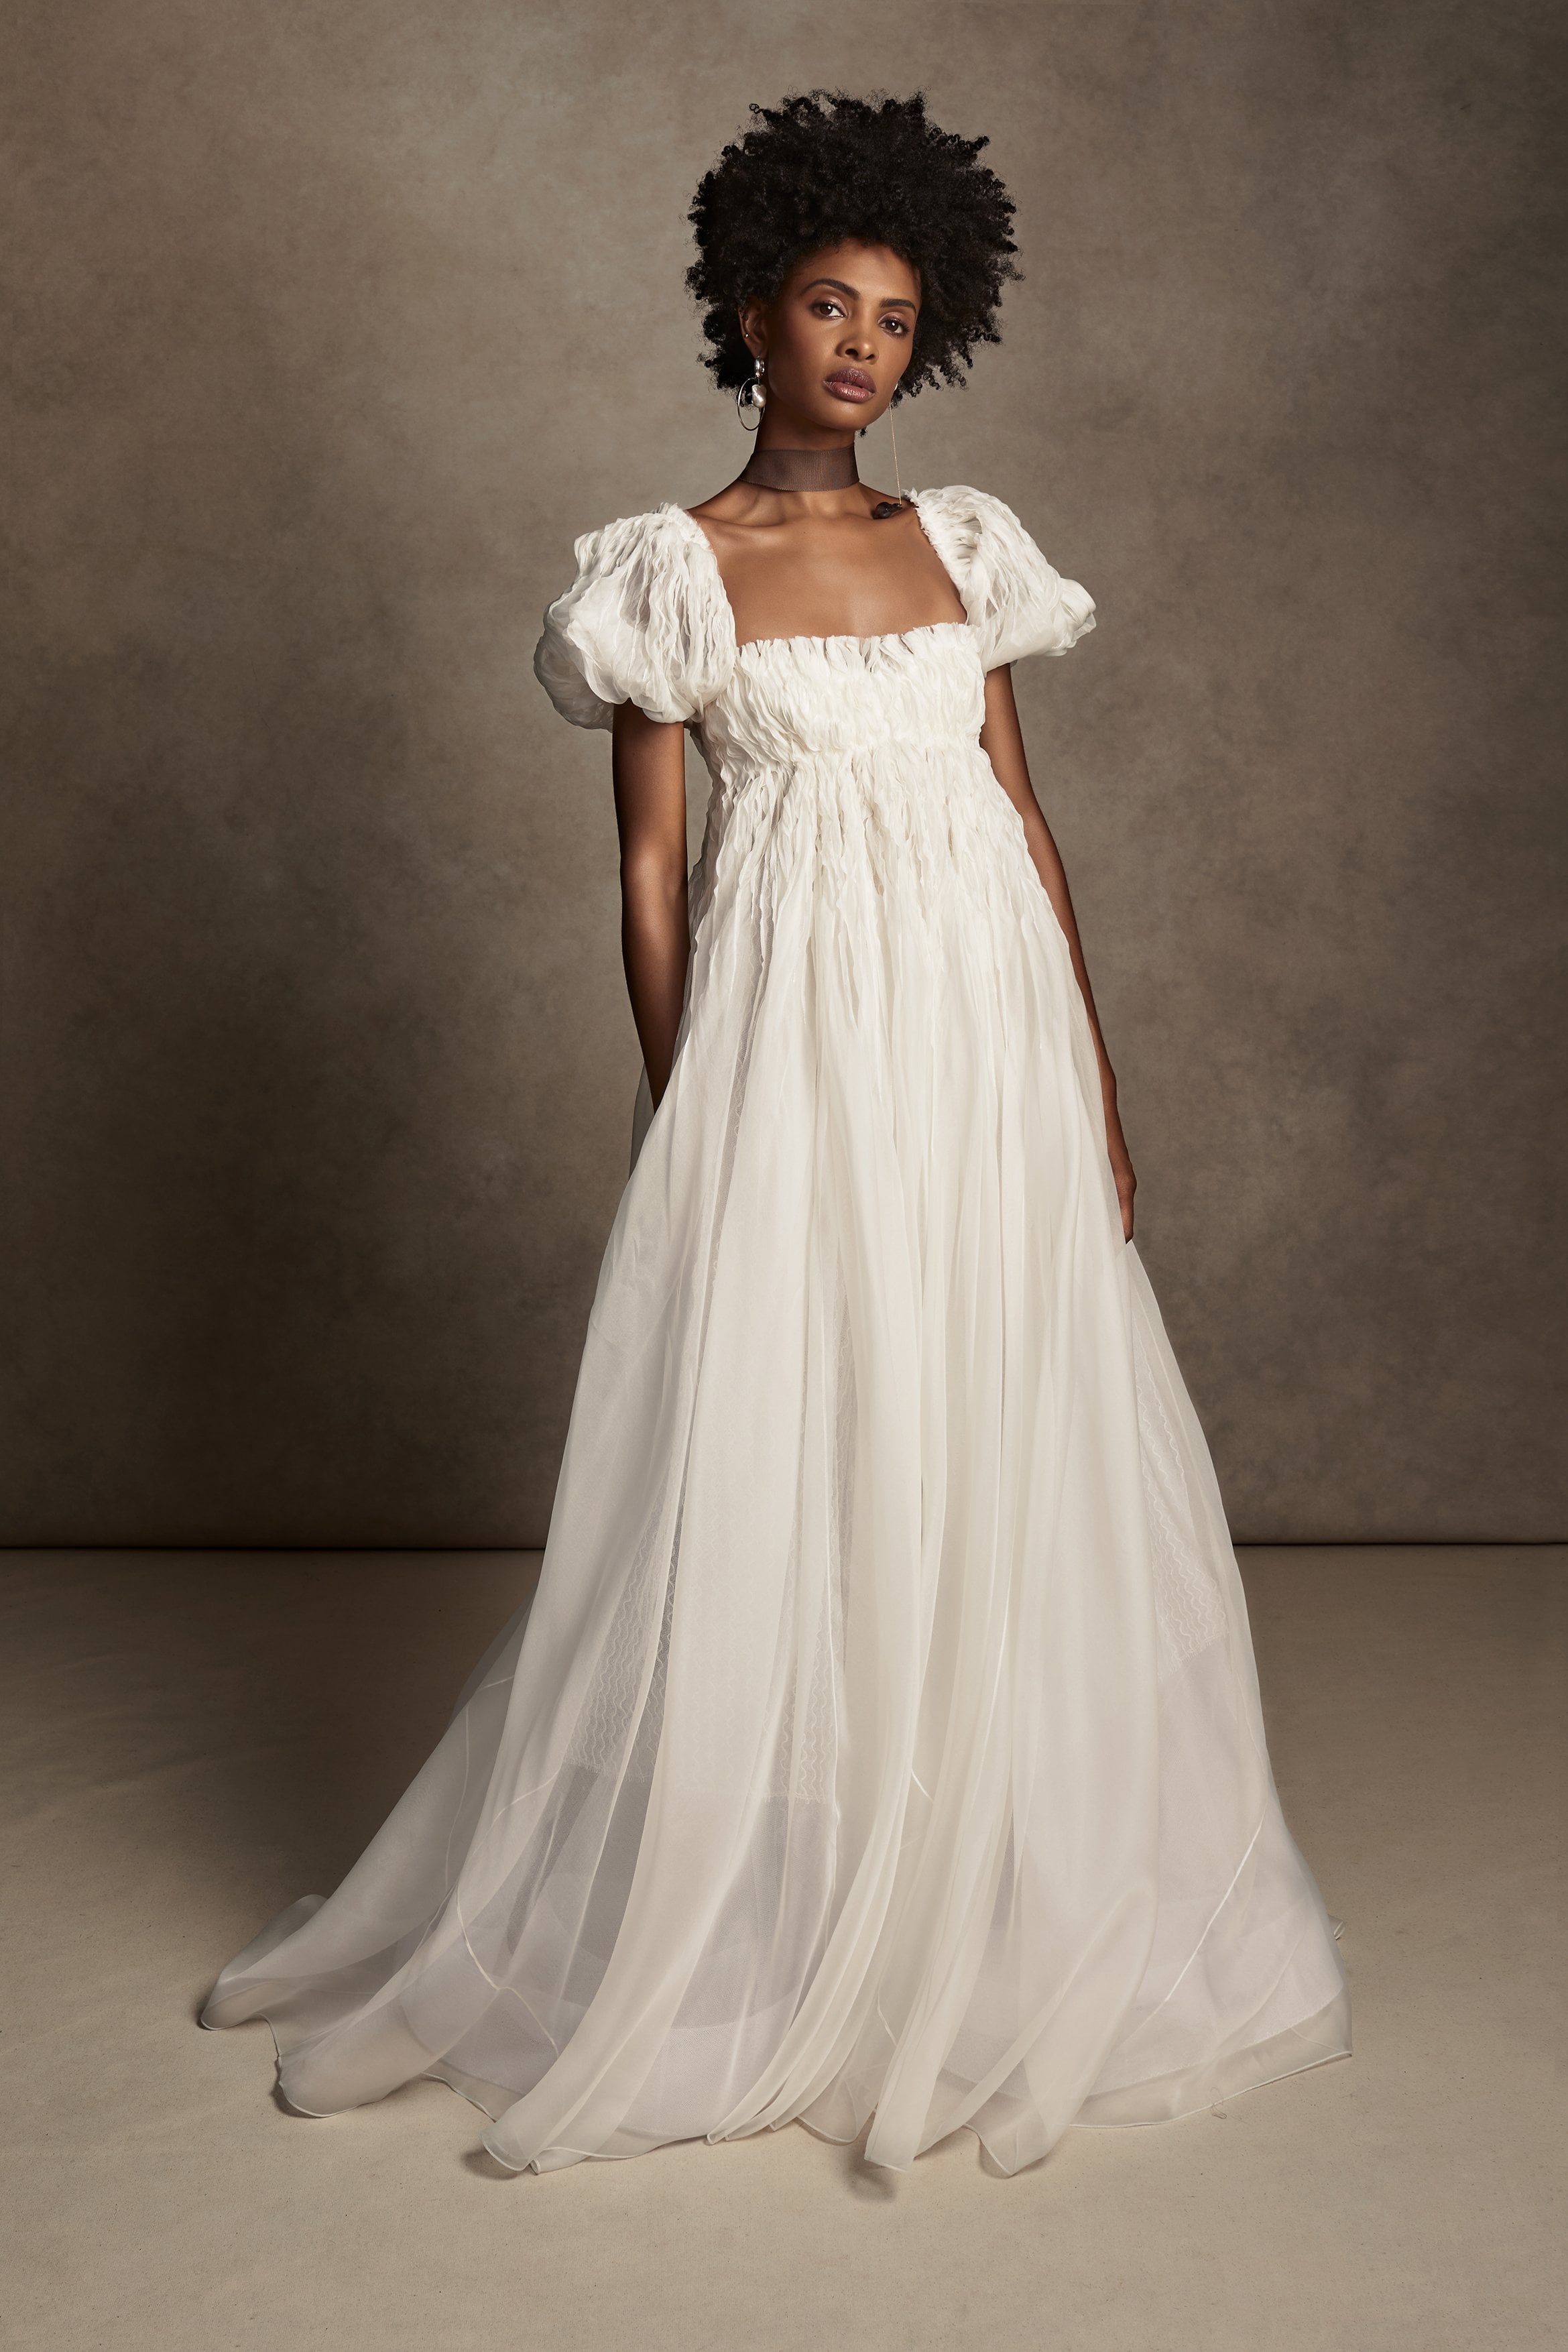 Regencycore Victorian-Inspired Wedding Dresses